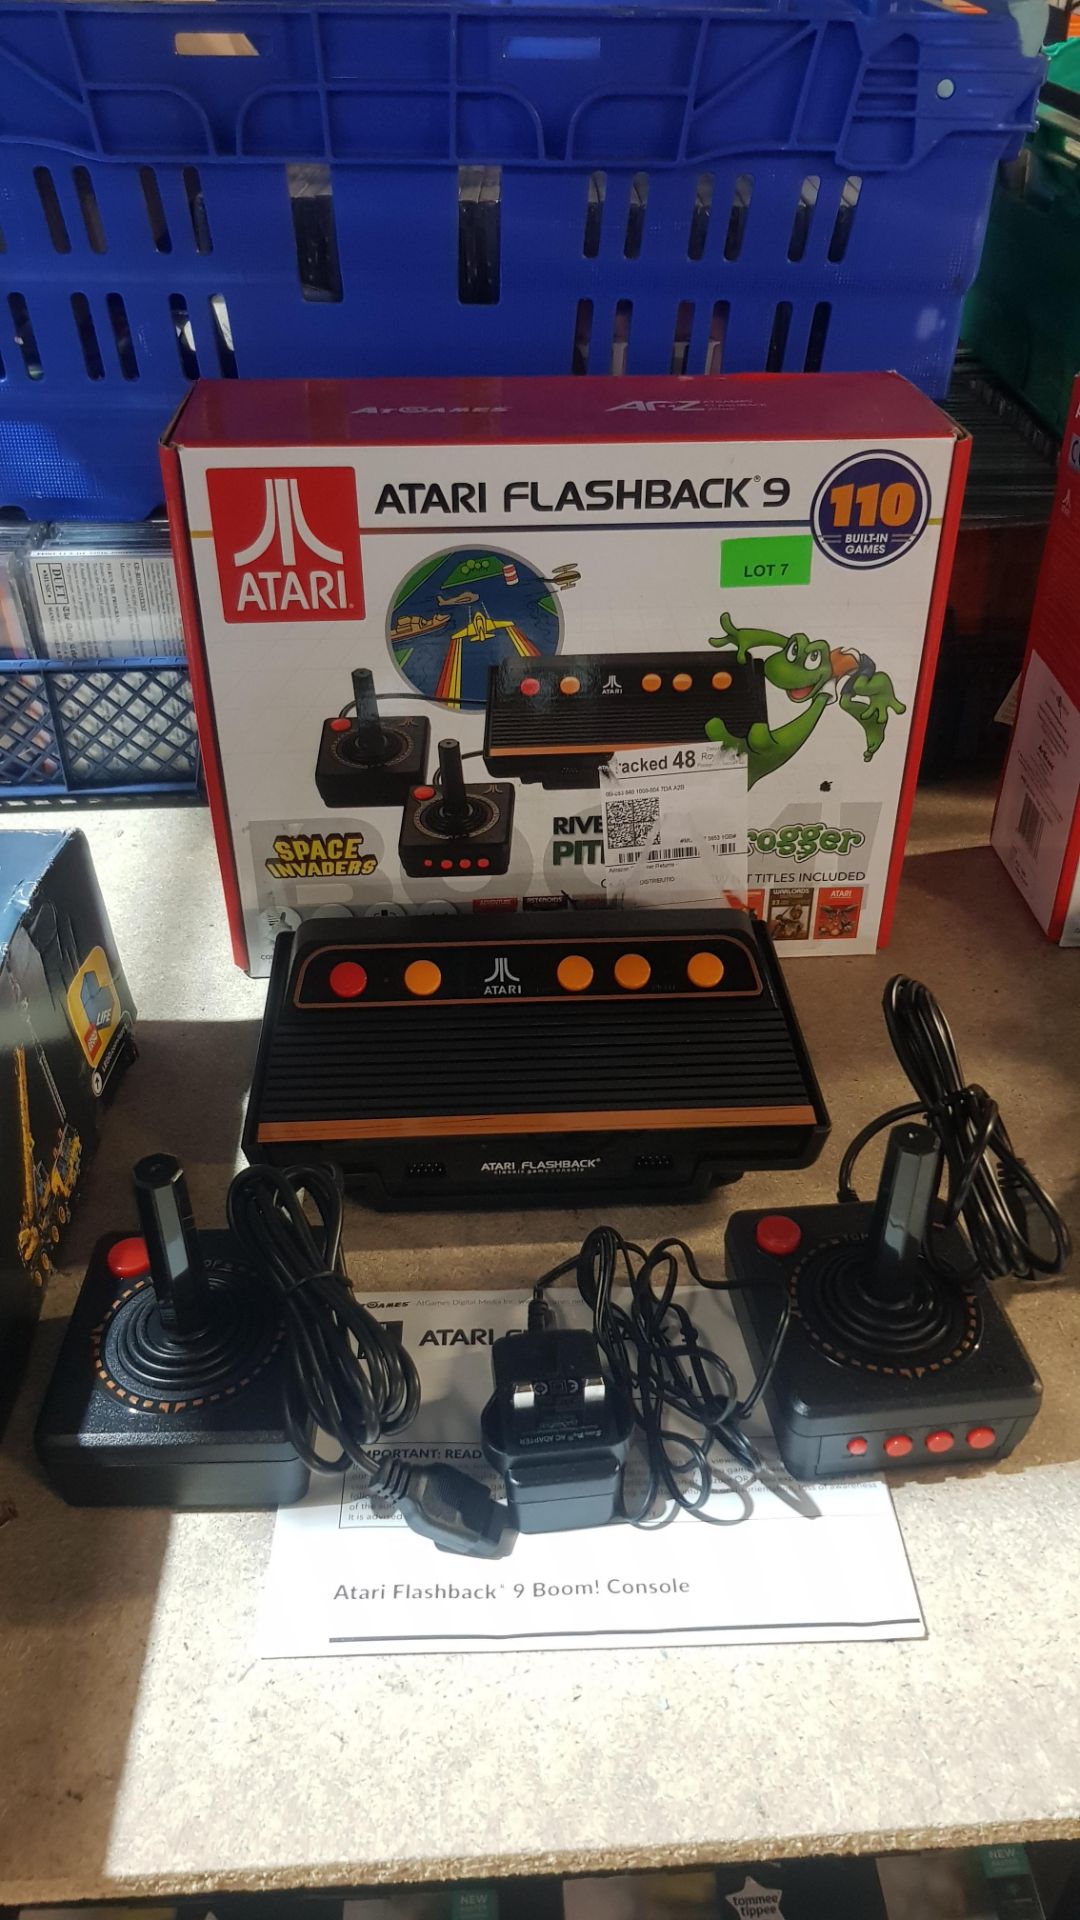 (R6A) Retro Gaming. 1 X Atari Flashback 9 Retro Console - Image 2 of 2